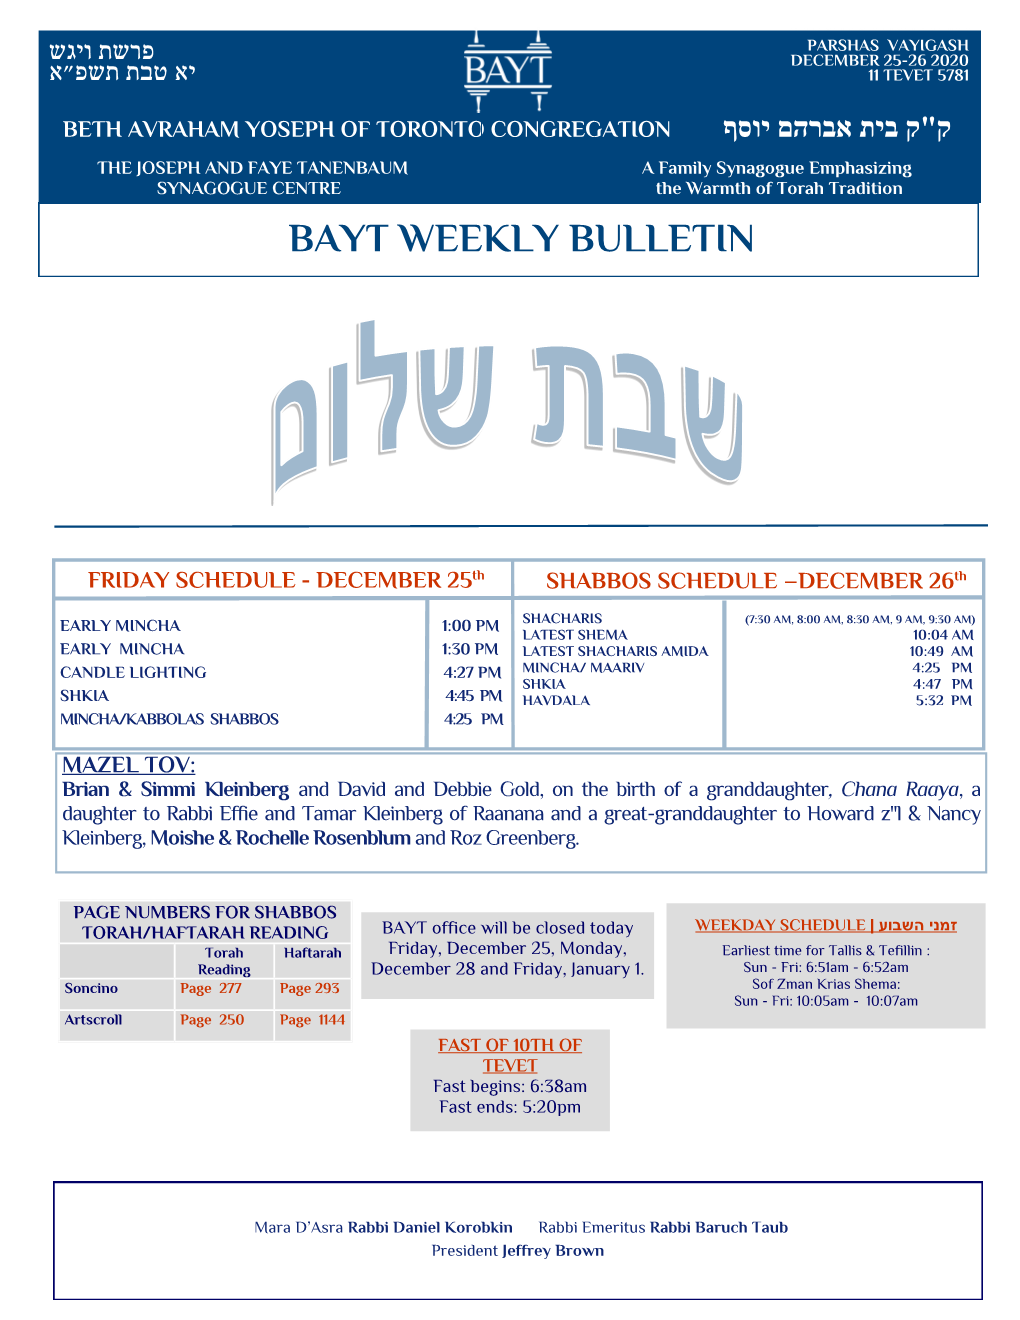 Yahrzeit List: for Friday, December 25-Thursday, December 31